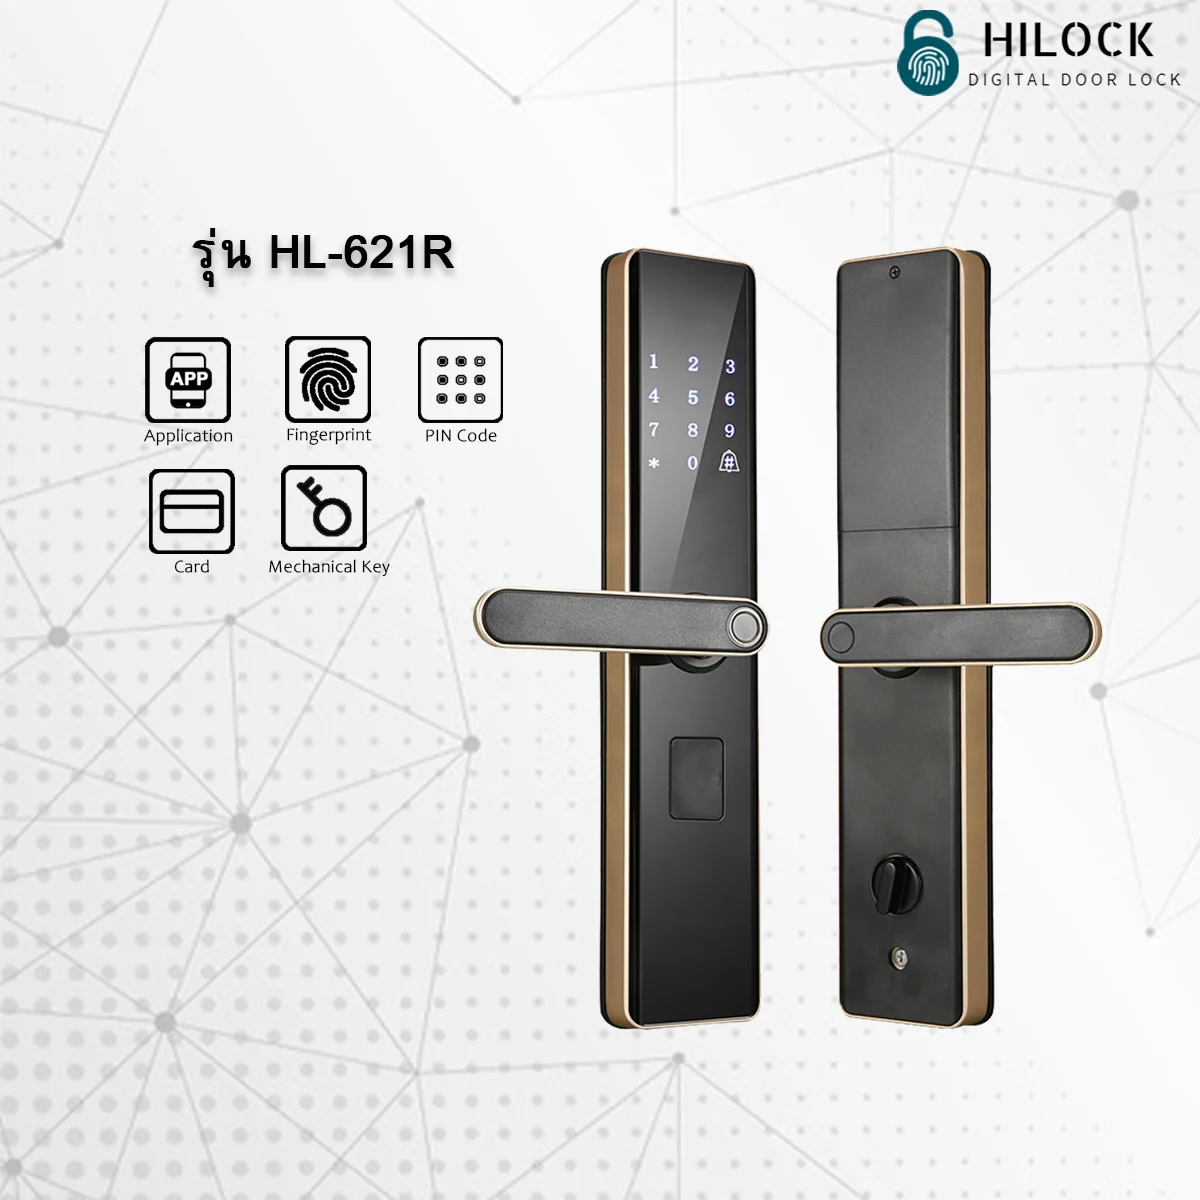 HL-621R digital door lock ประตู ดิจิตอล